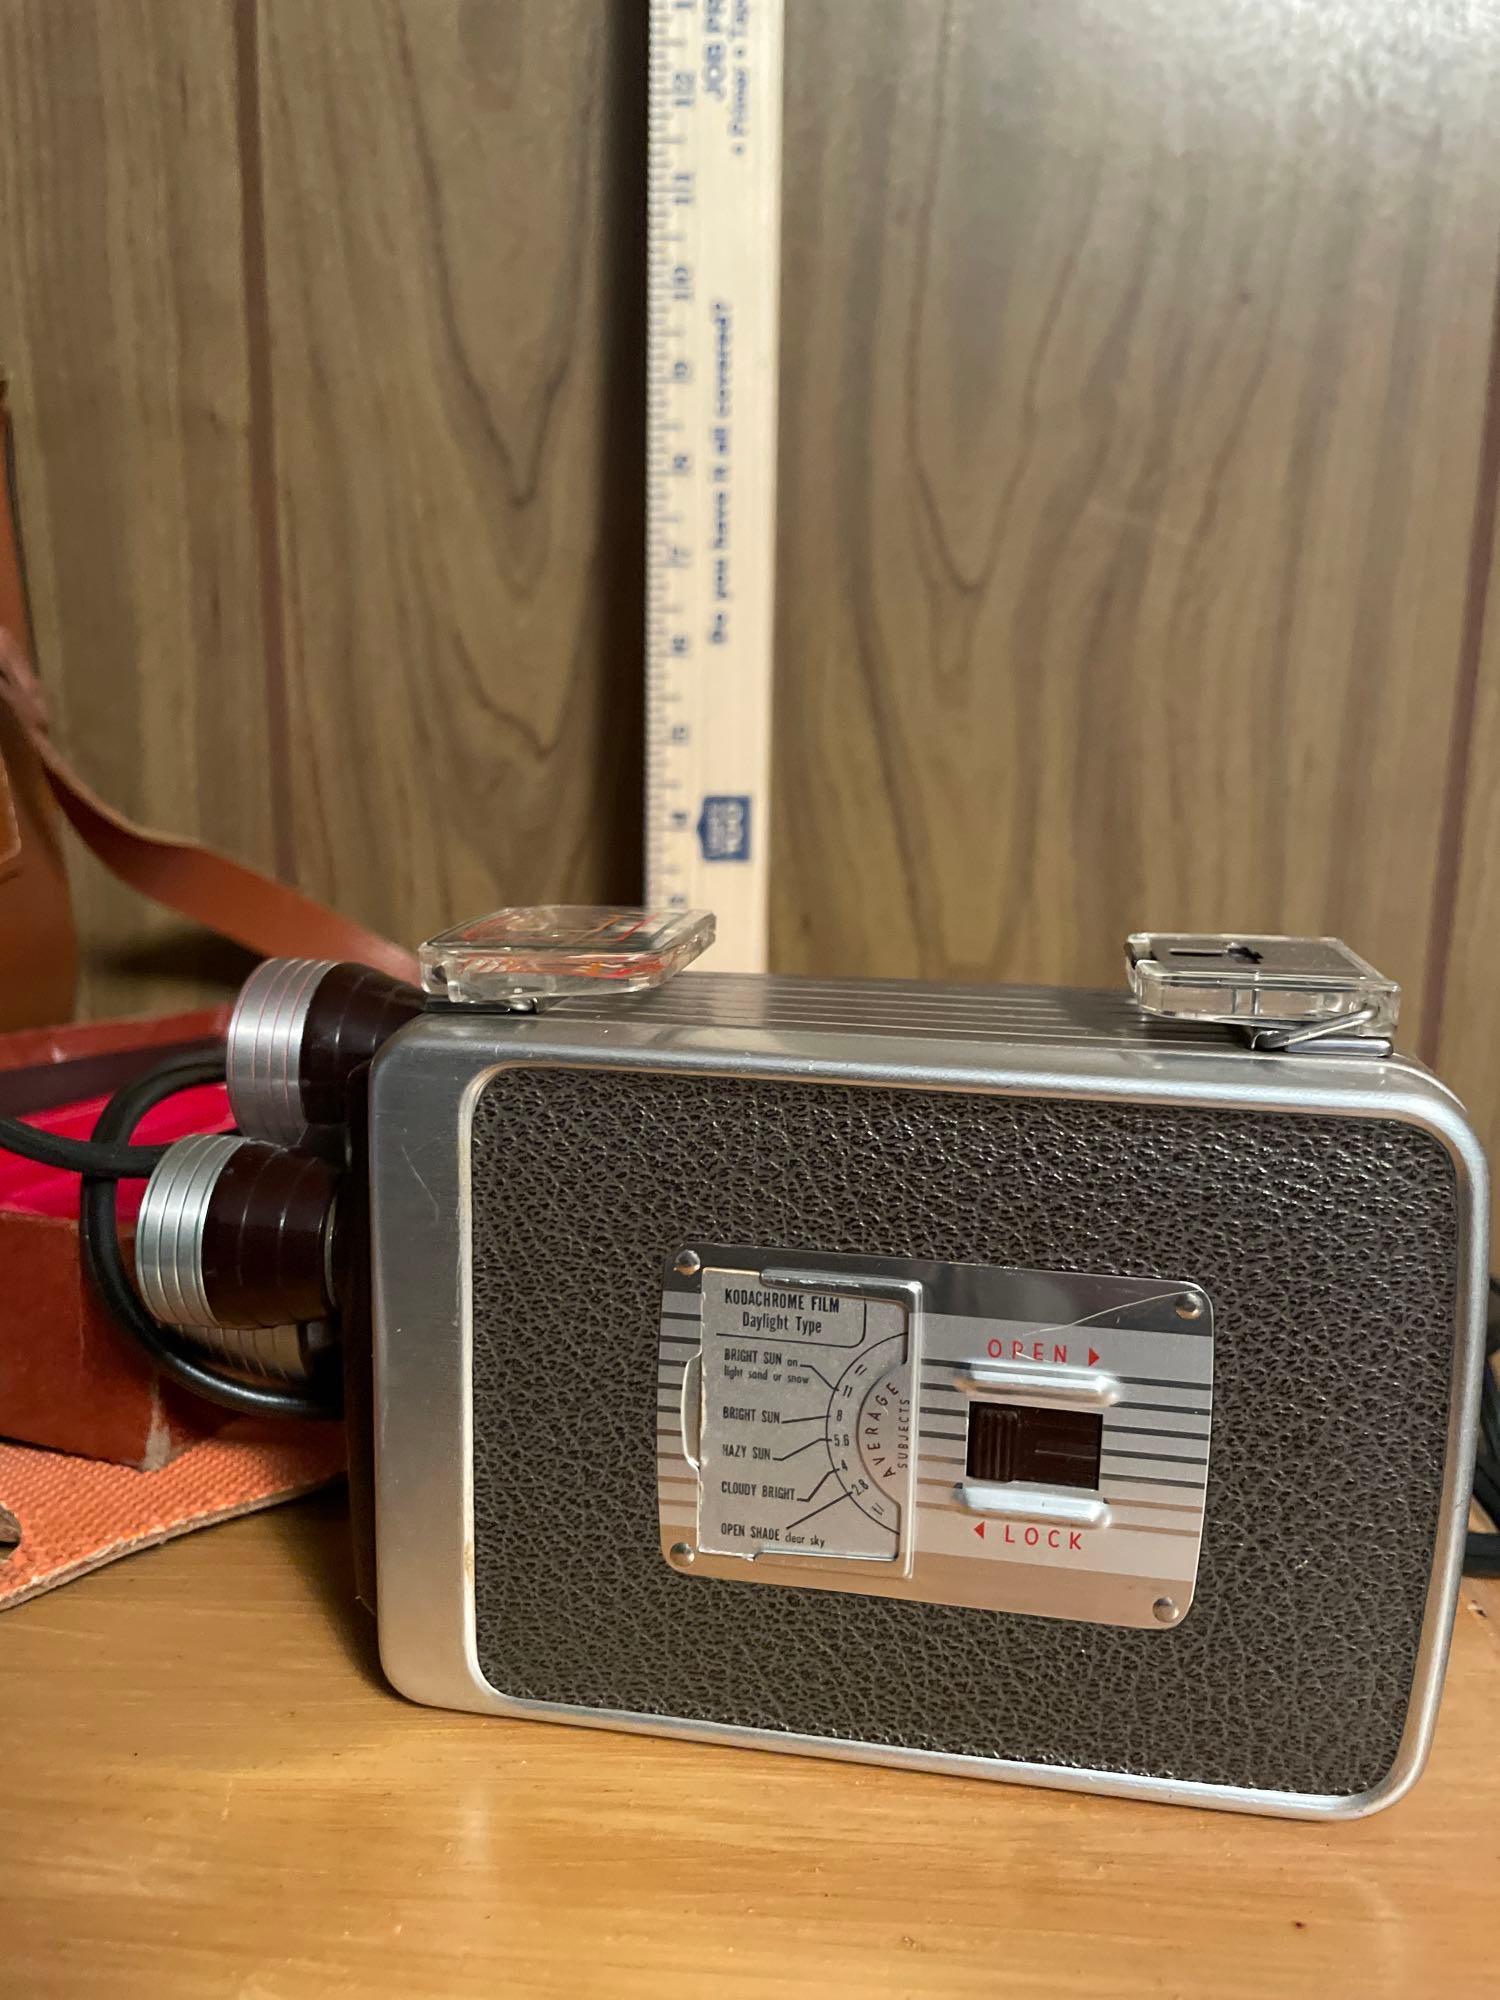 Vtg Kodak Brownie Camera, Flash, Case and Misc